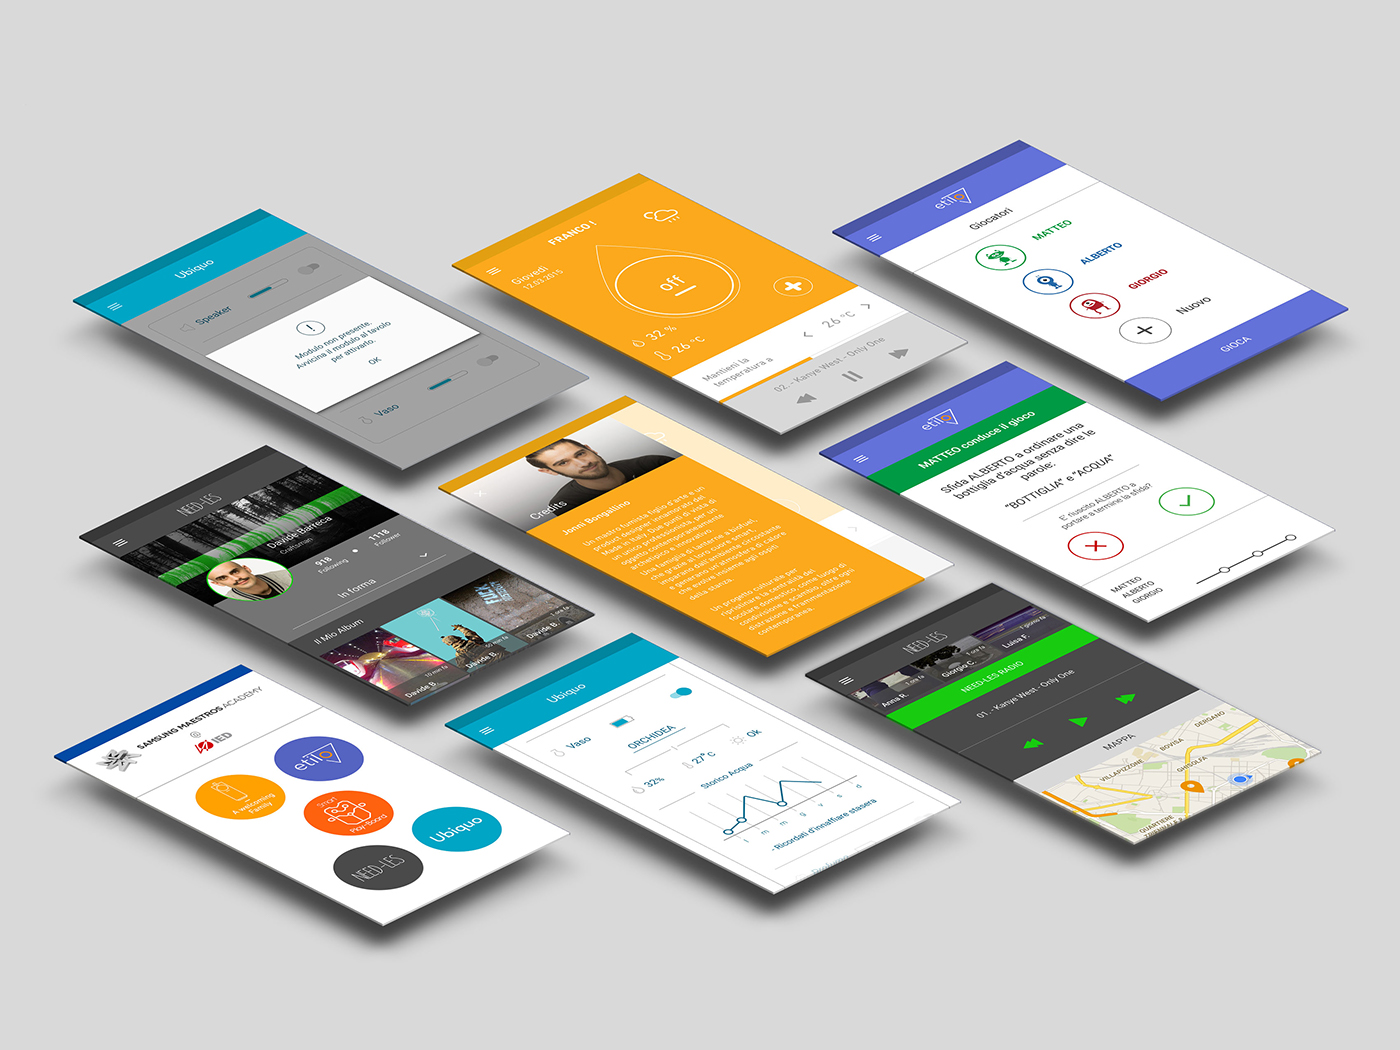 Samsung narai milan Fablab Leo Burnett SAMSUNG MAESTROS ACADEMY visual design app design user interface